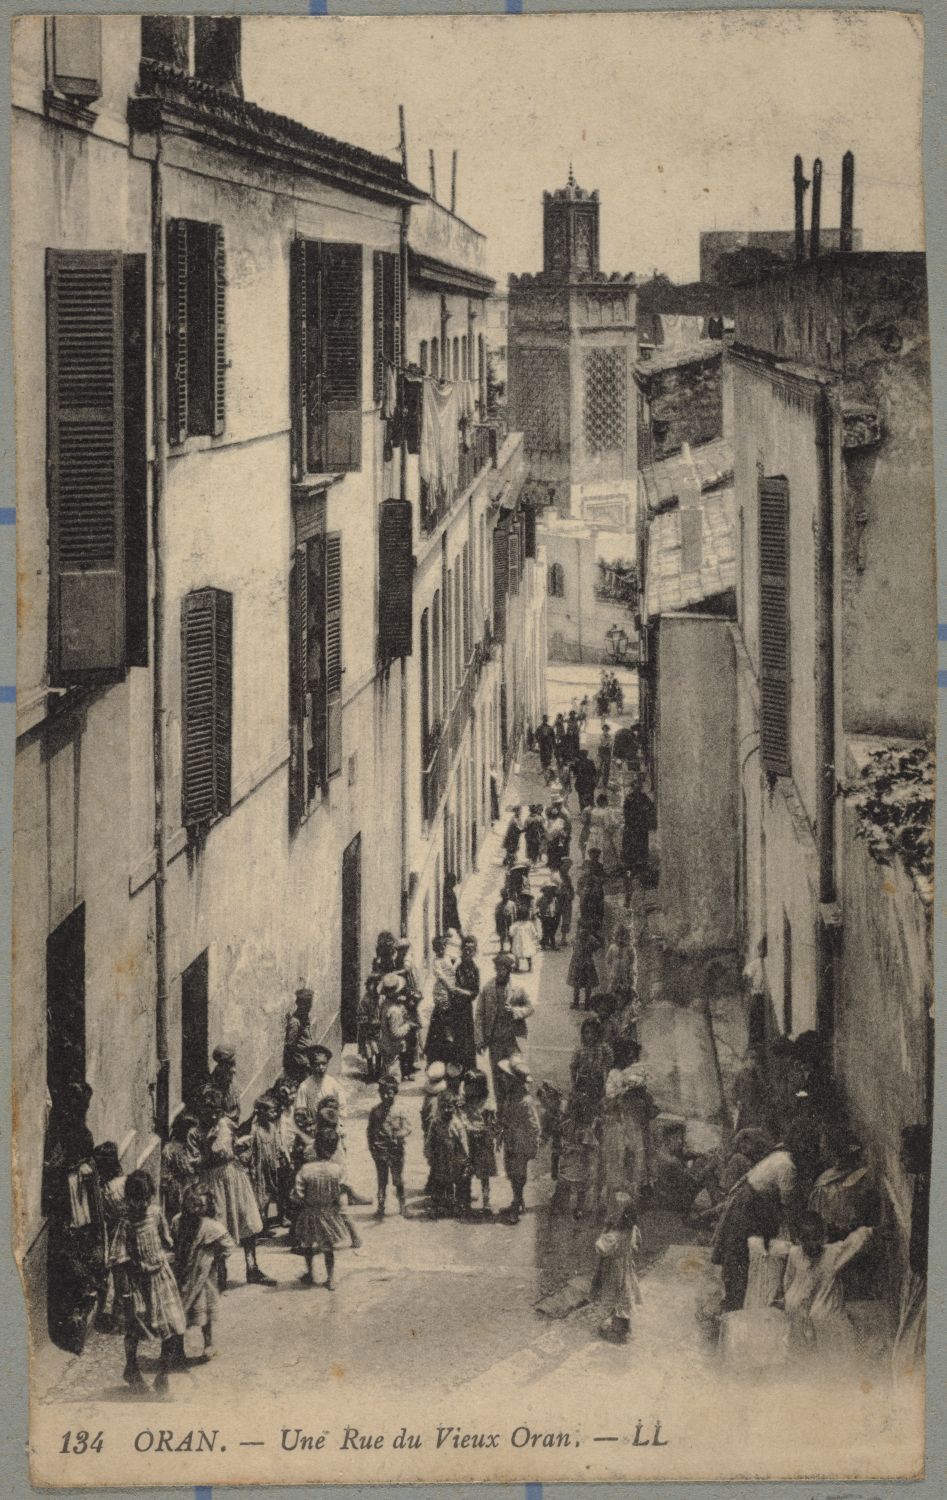 View down a medina street toward a minaret